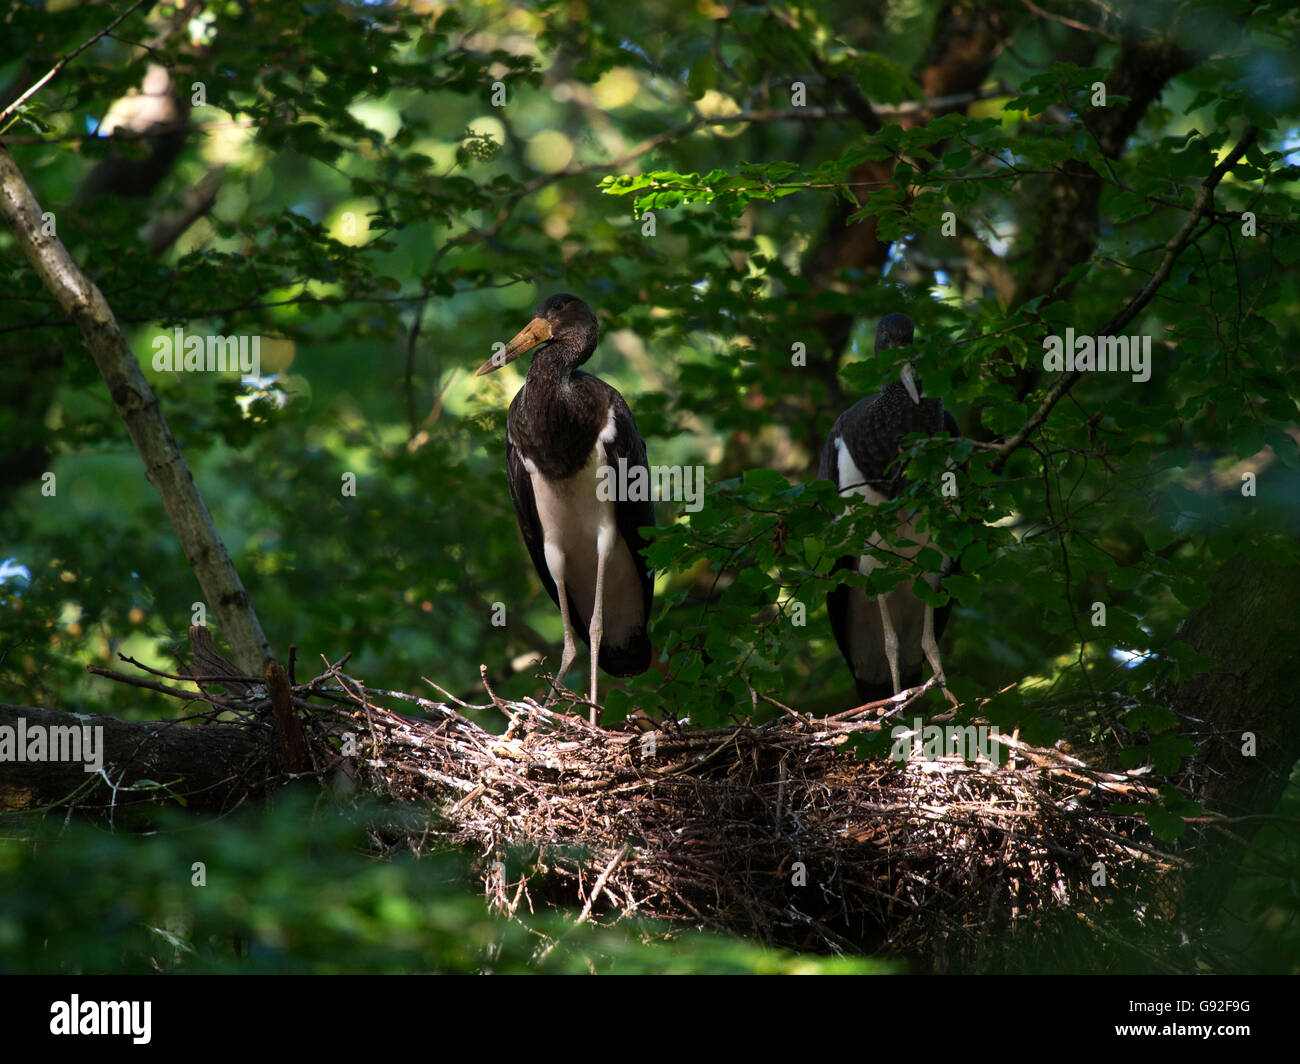 Black Storks at nest (Ciconia nigra) Stock Photo